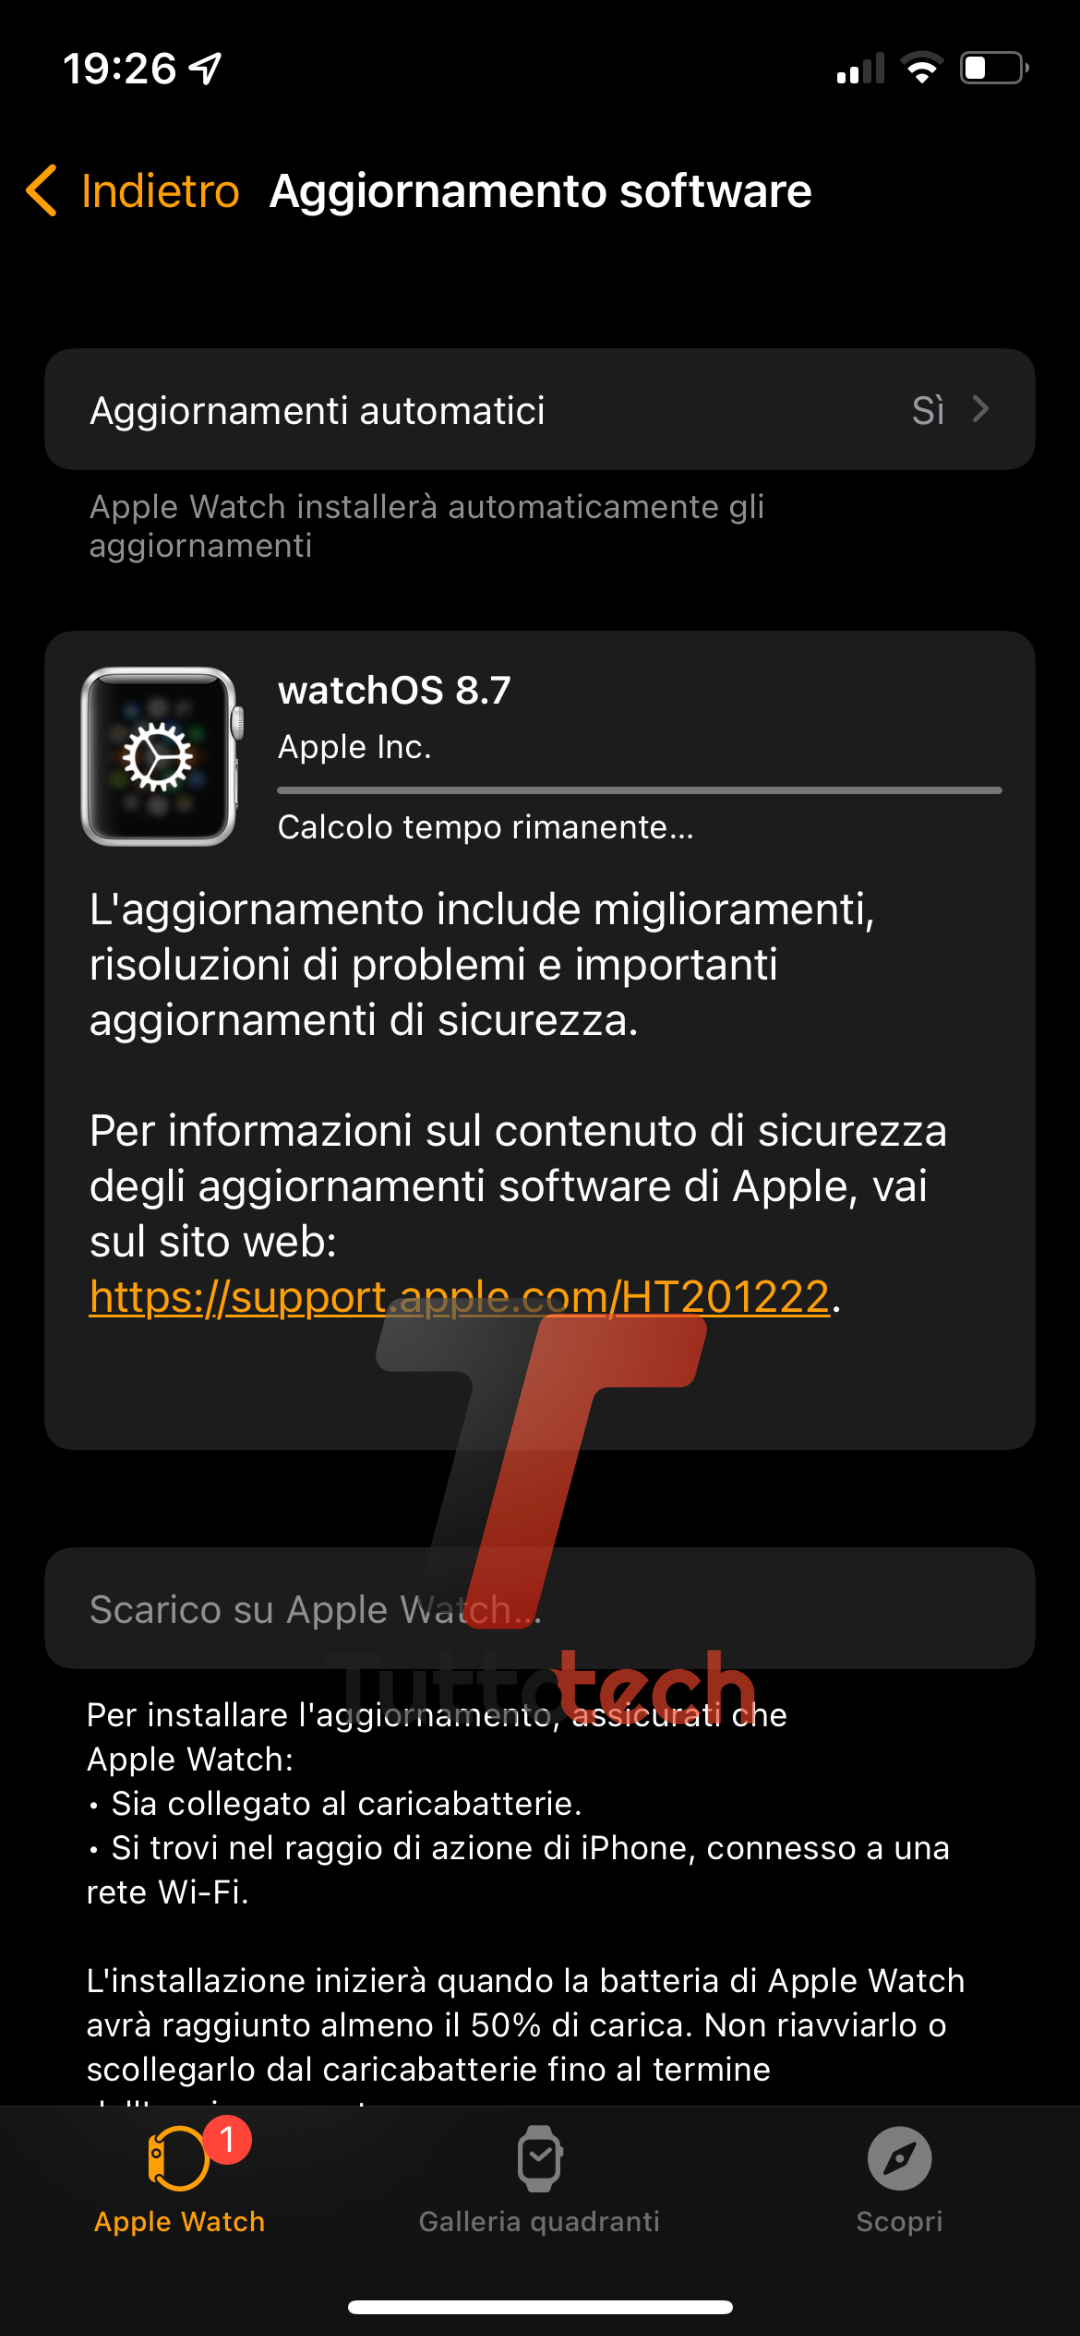 Il changelog dell'aggiornamento a watchOS 8.7 su Apple Watch 6